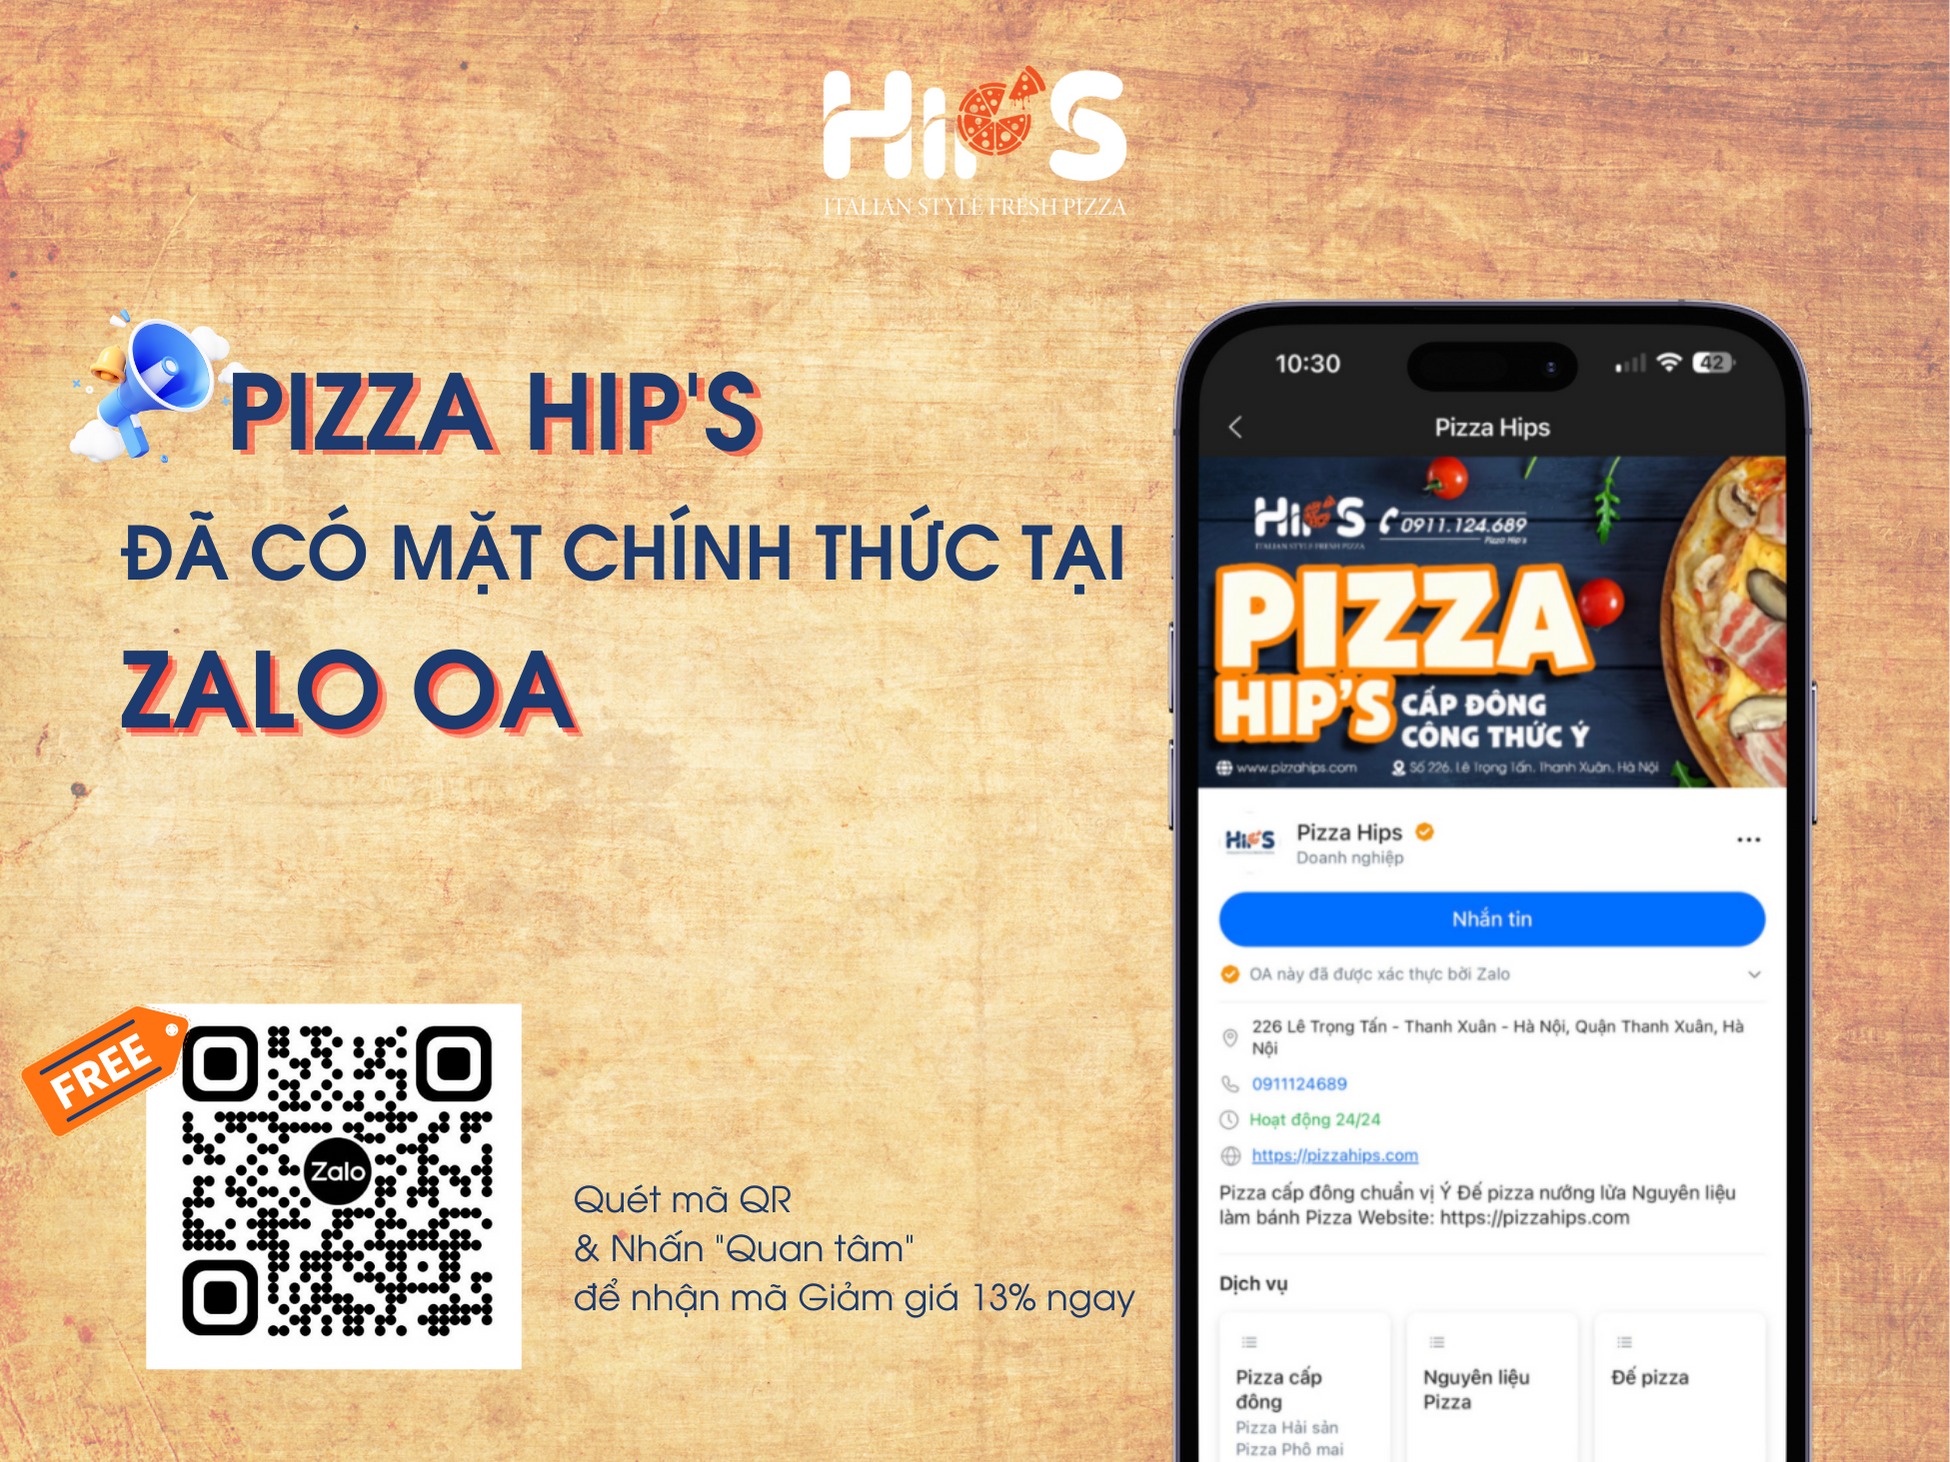 Pizza Hip's đã có mặt trên Zalo OA